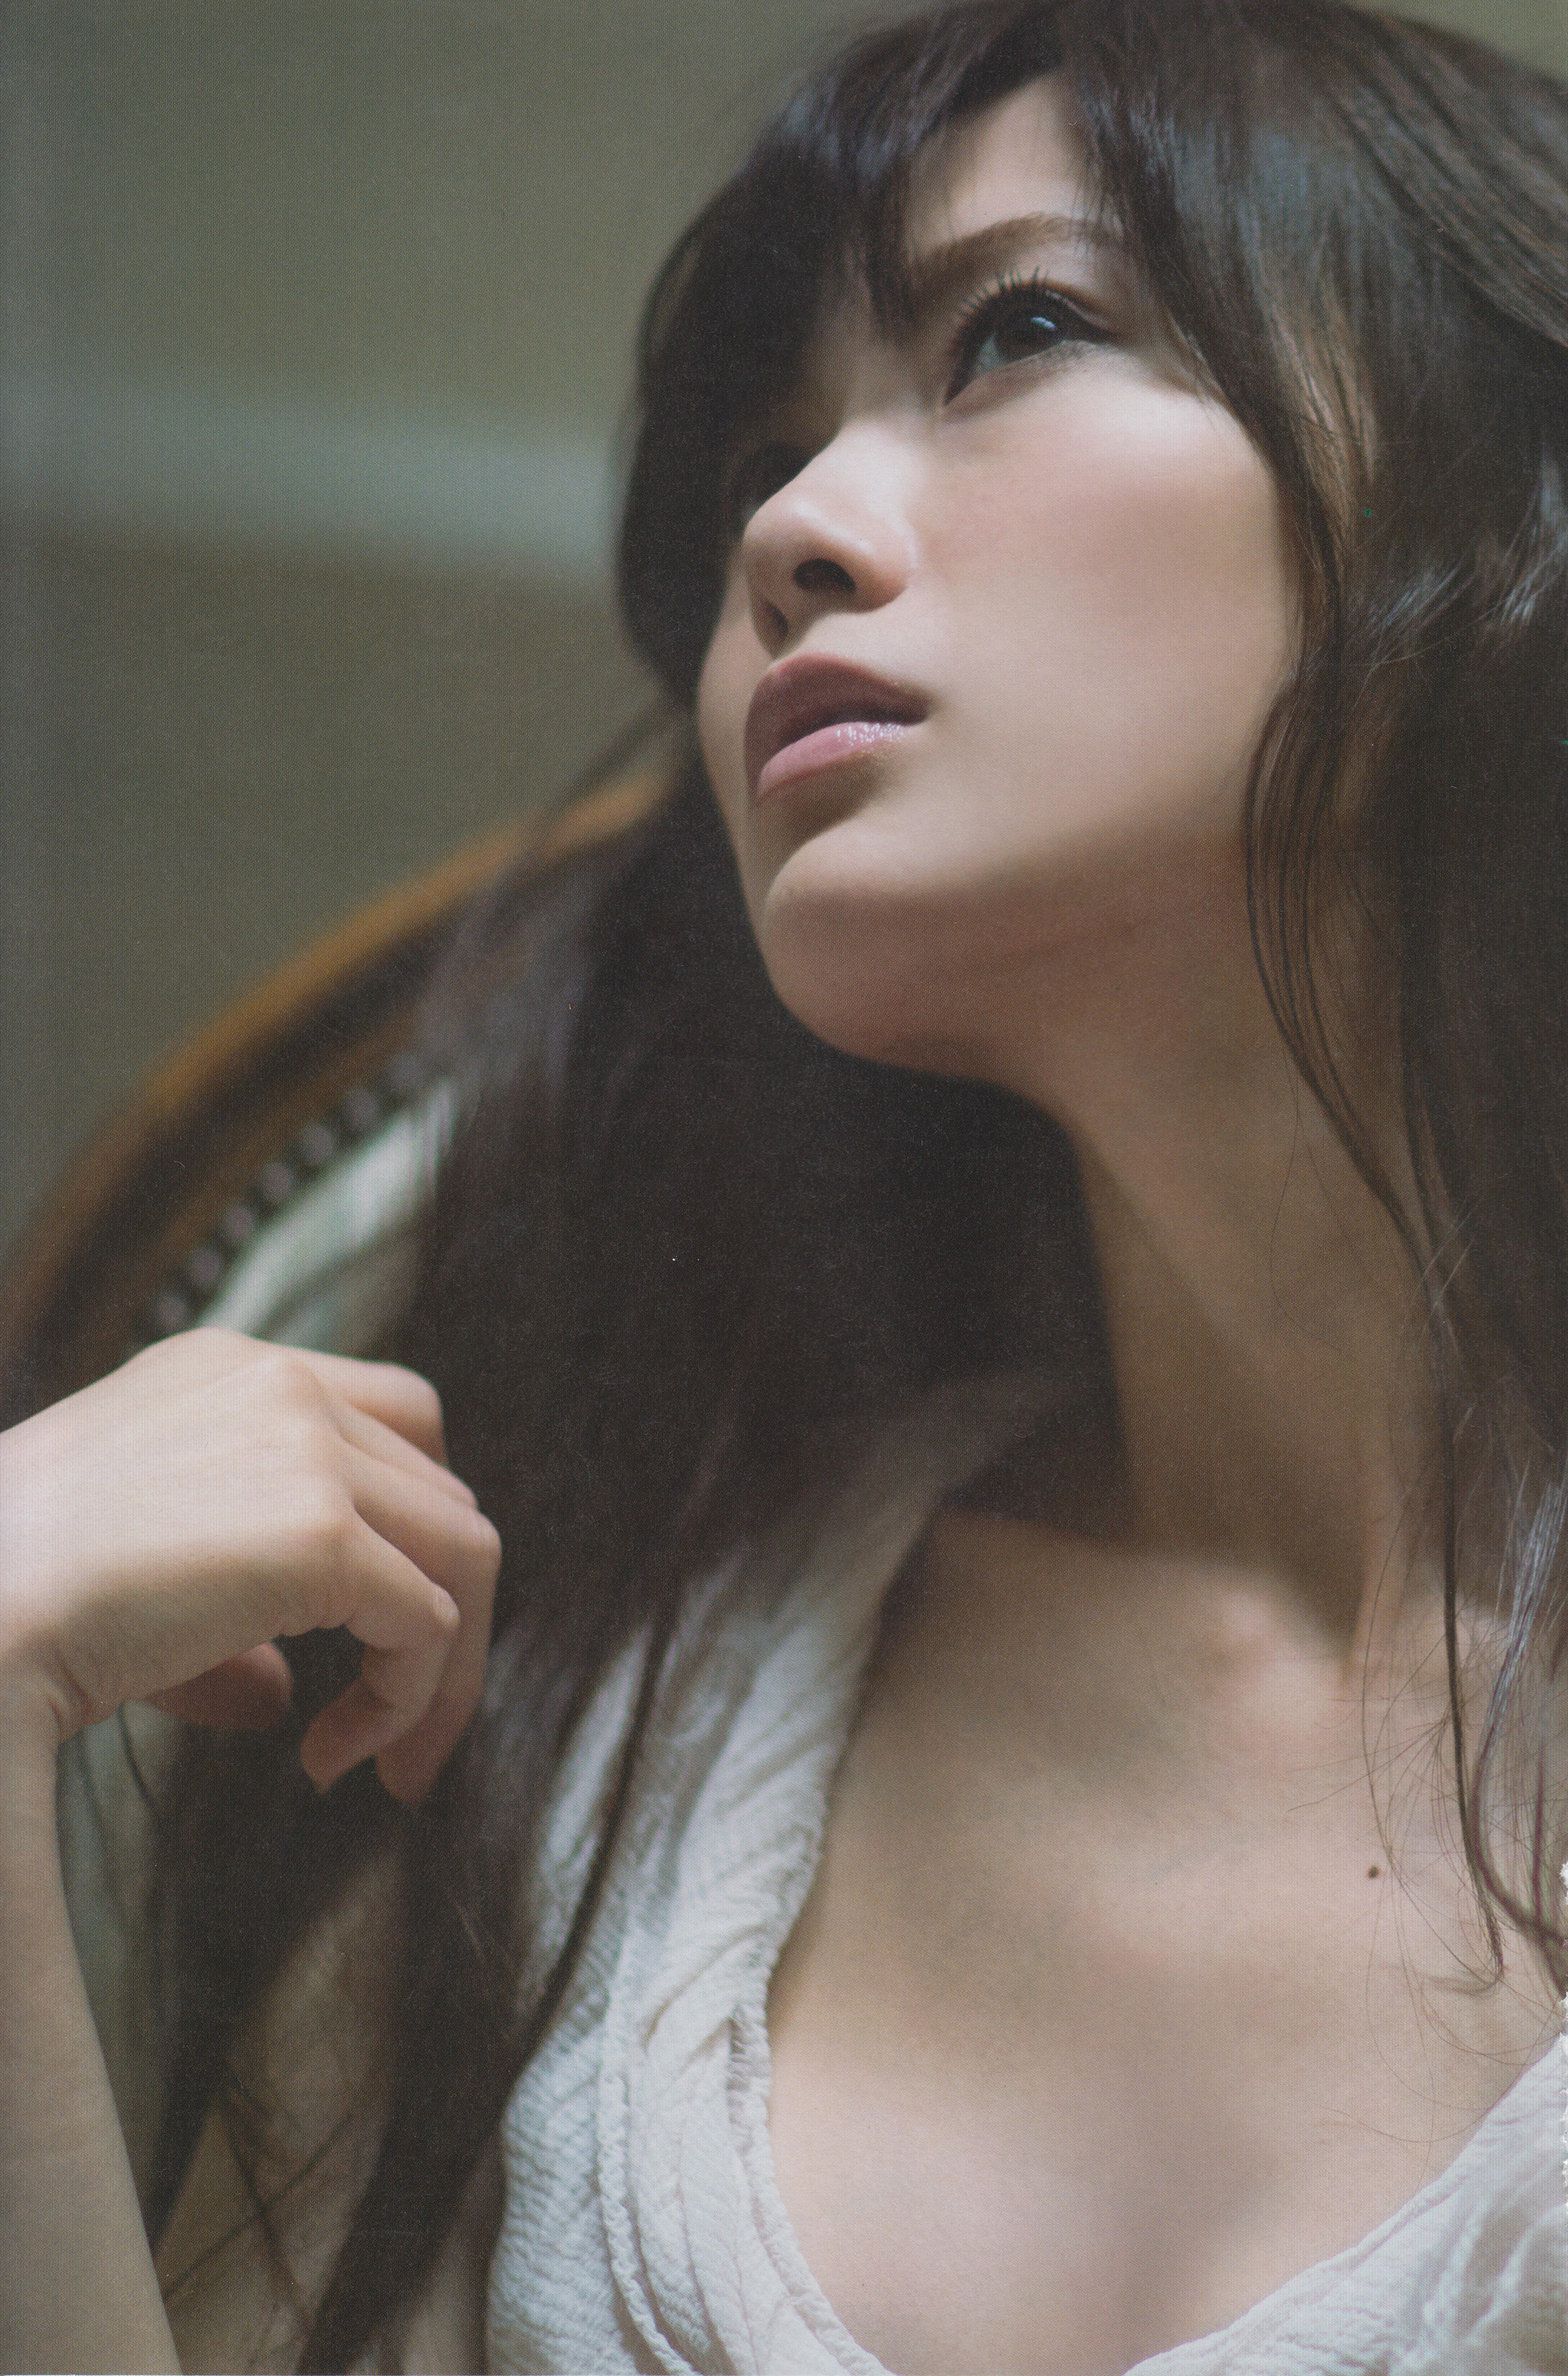 Mai Shiraishi in her first photobook "Innocent Adult"